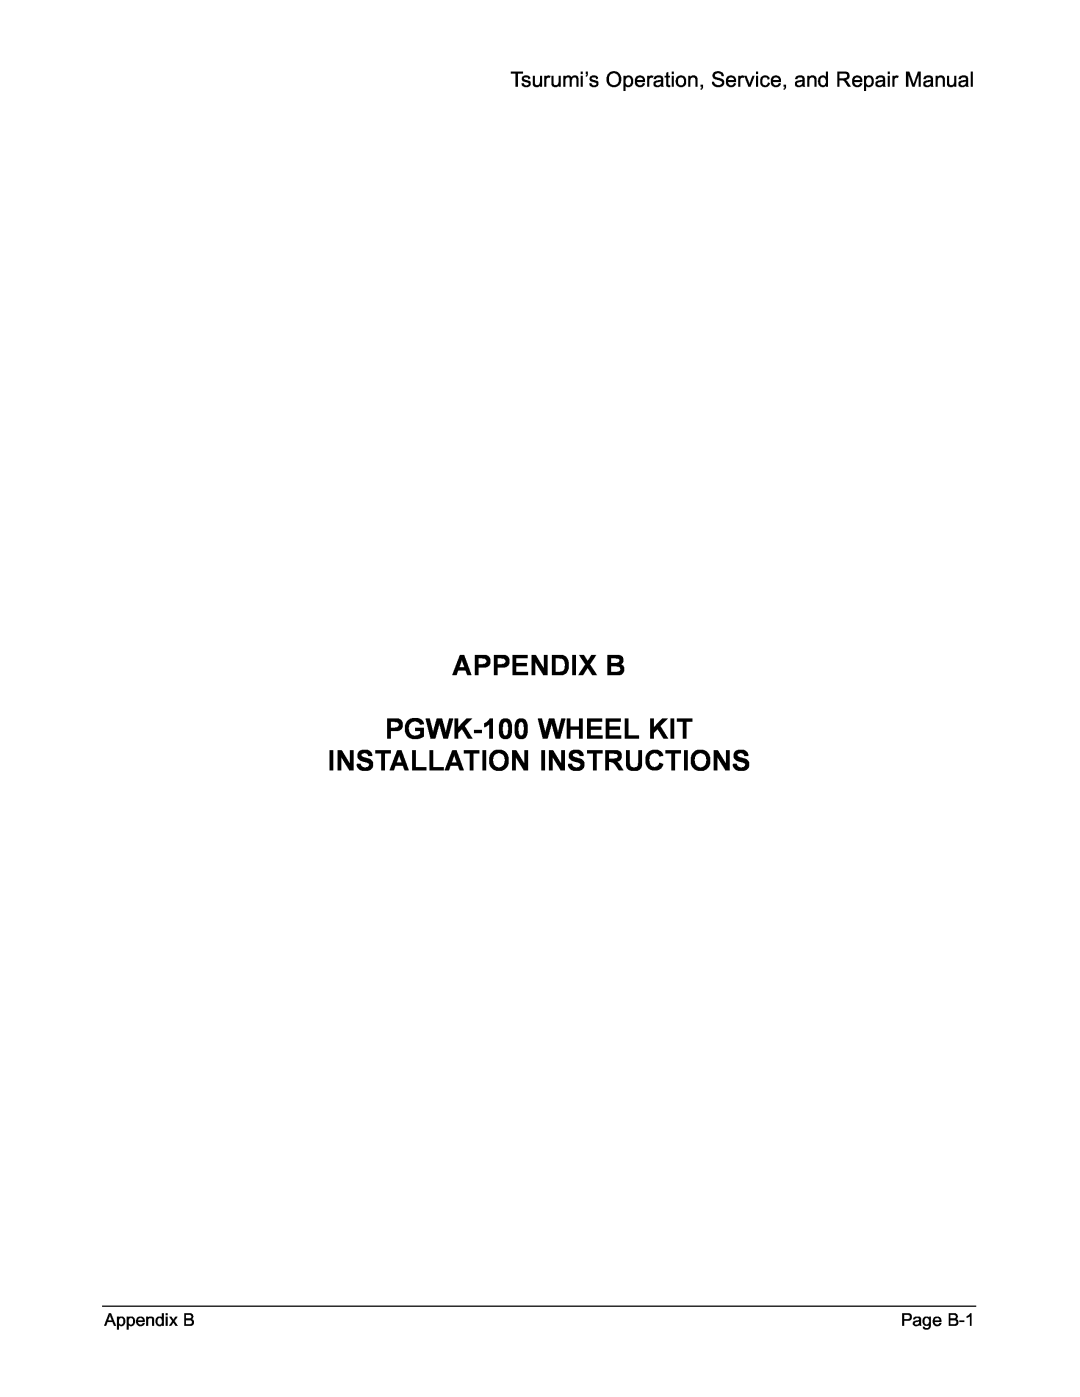 Honda Power Equipment TPG-4300H-DX manual APPENDIX B PGWK-100WHEEL KIT, Installation Instructions, Appendix B, Page B-1 